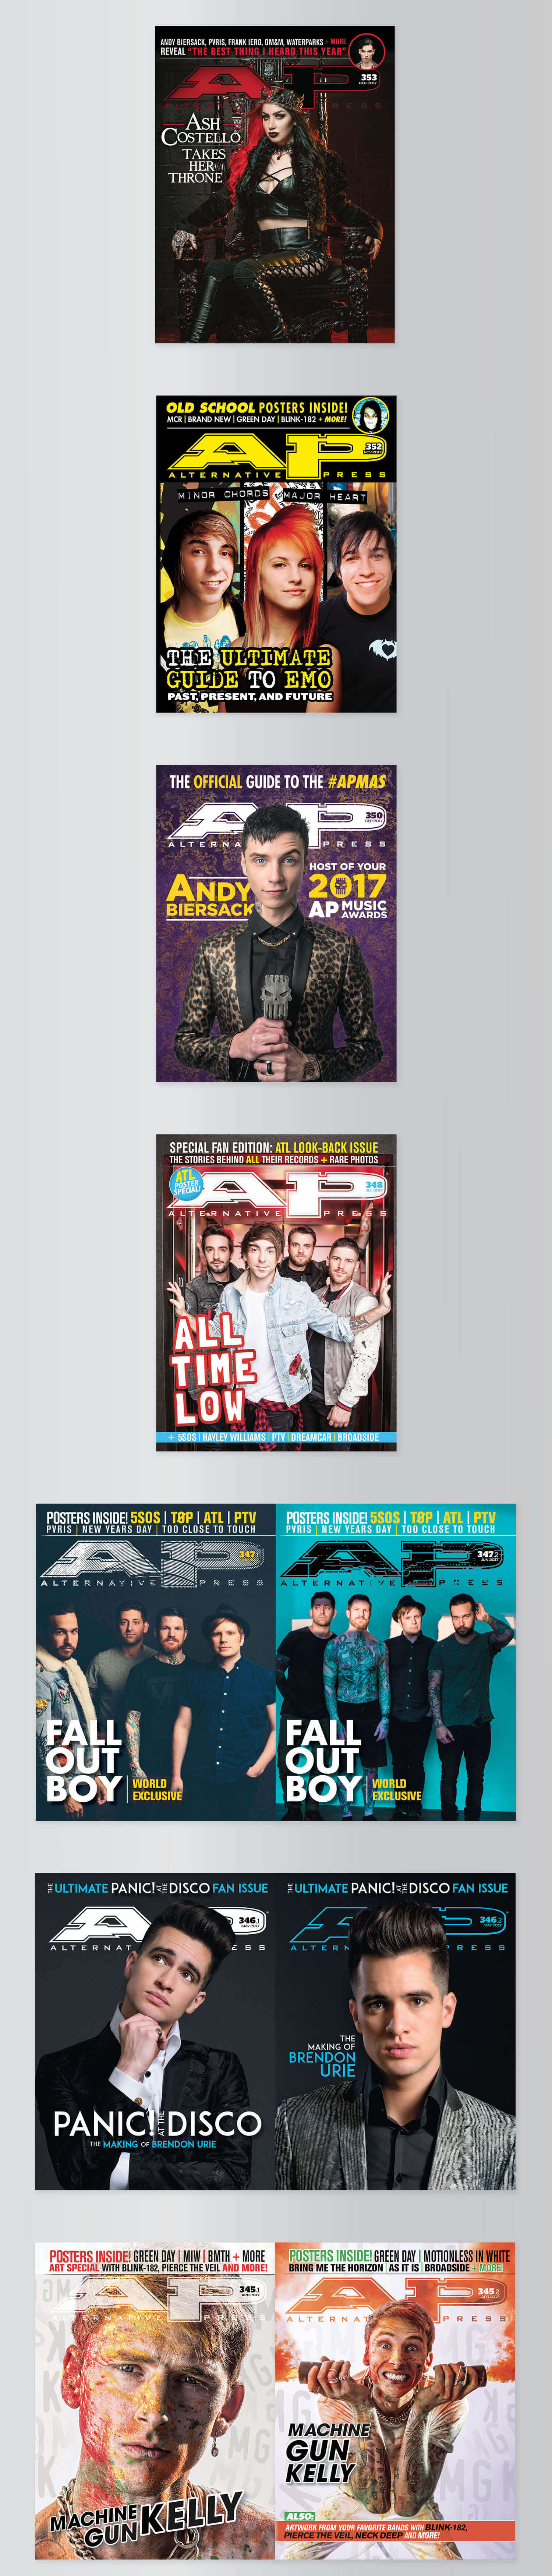 Alternative Press Magazine Covers